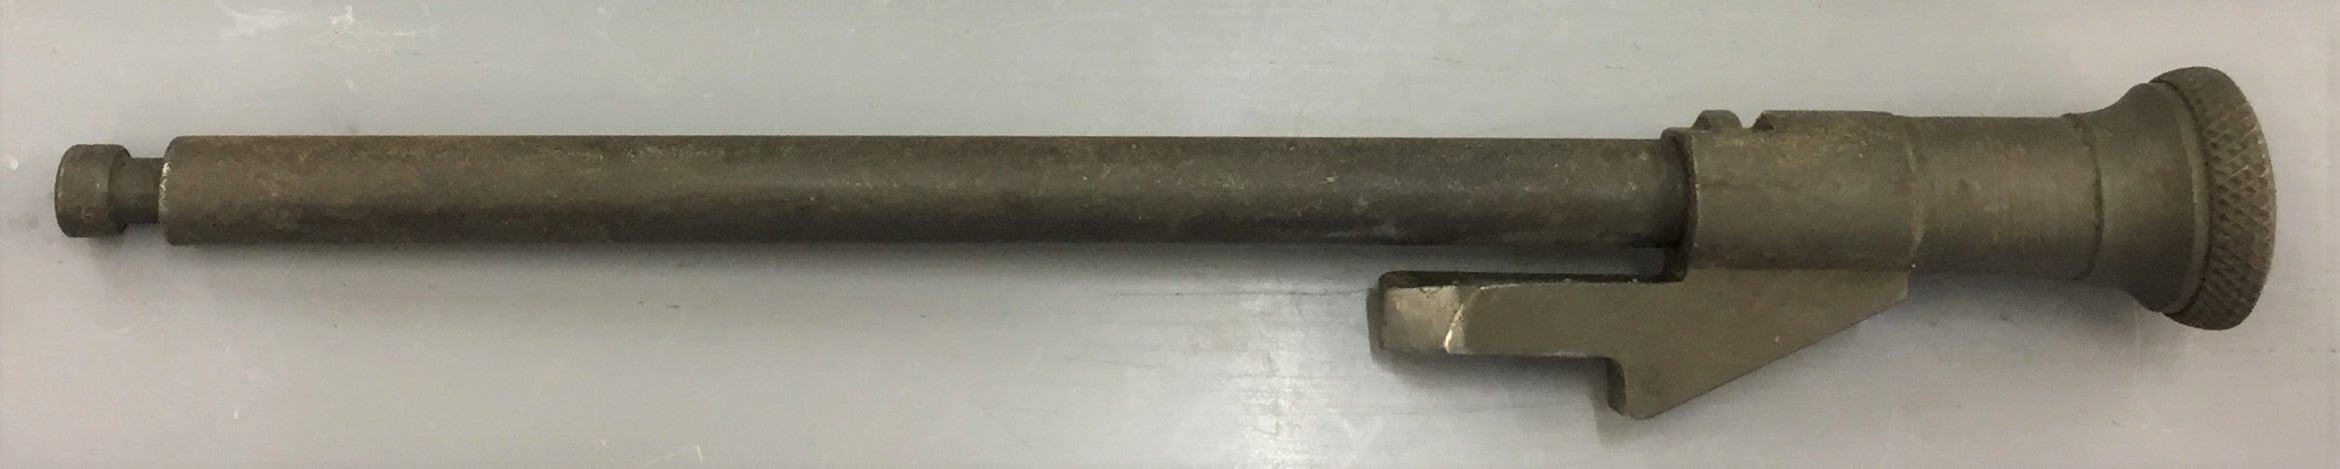 Springfield M1903 .30-06 Firing Pin Rod (SPR03H009)